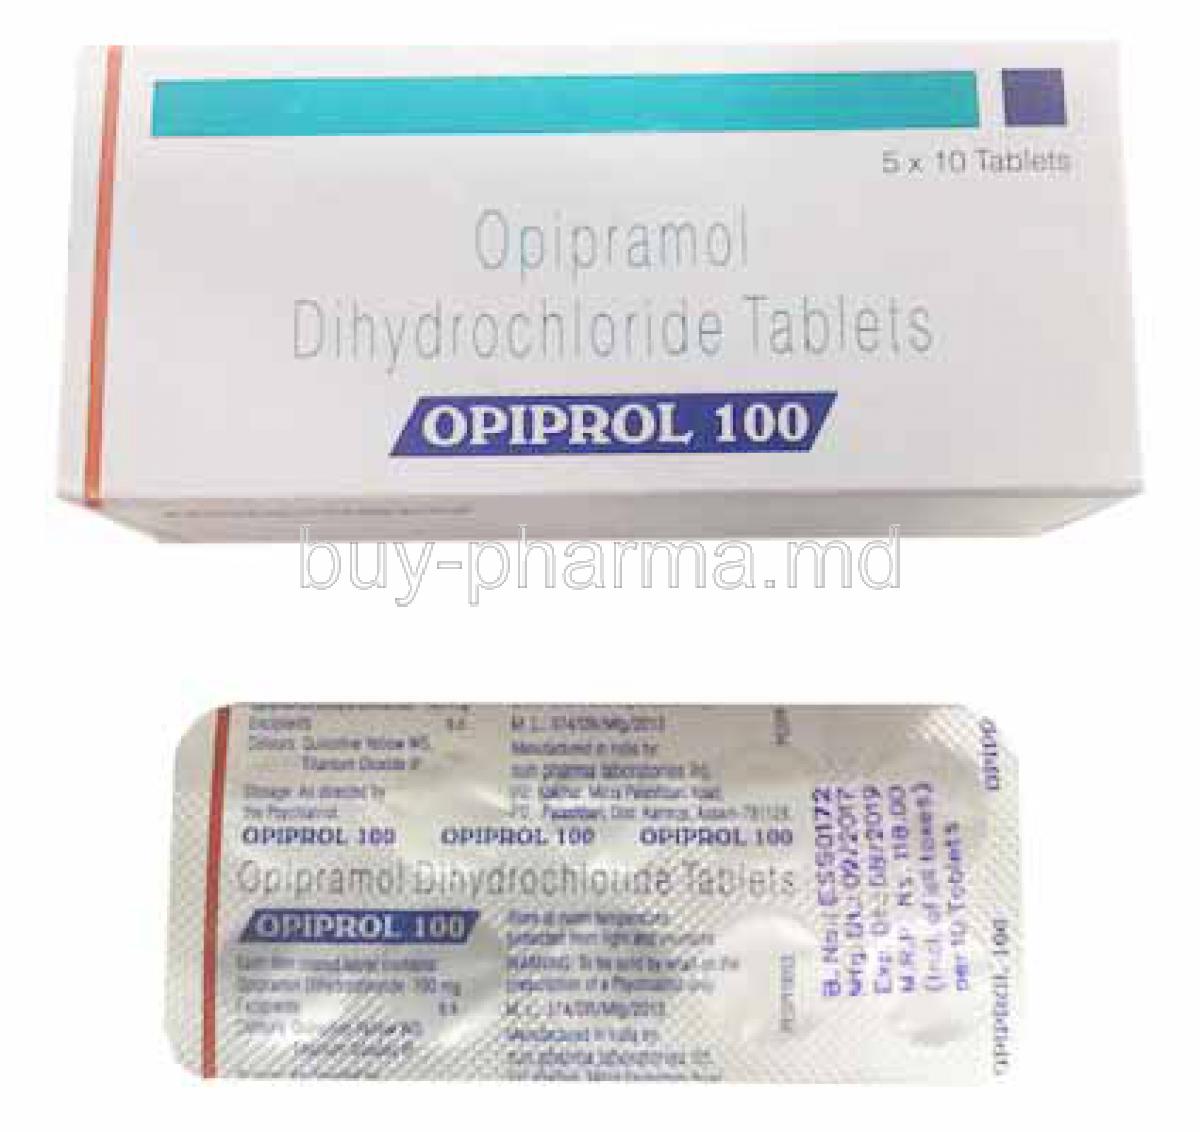 Generic Pramolan, Opipramol, 5 x 10 tablets, 100mg